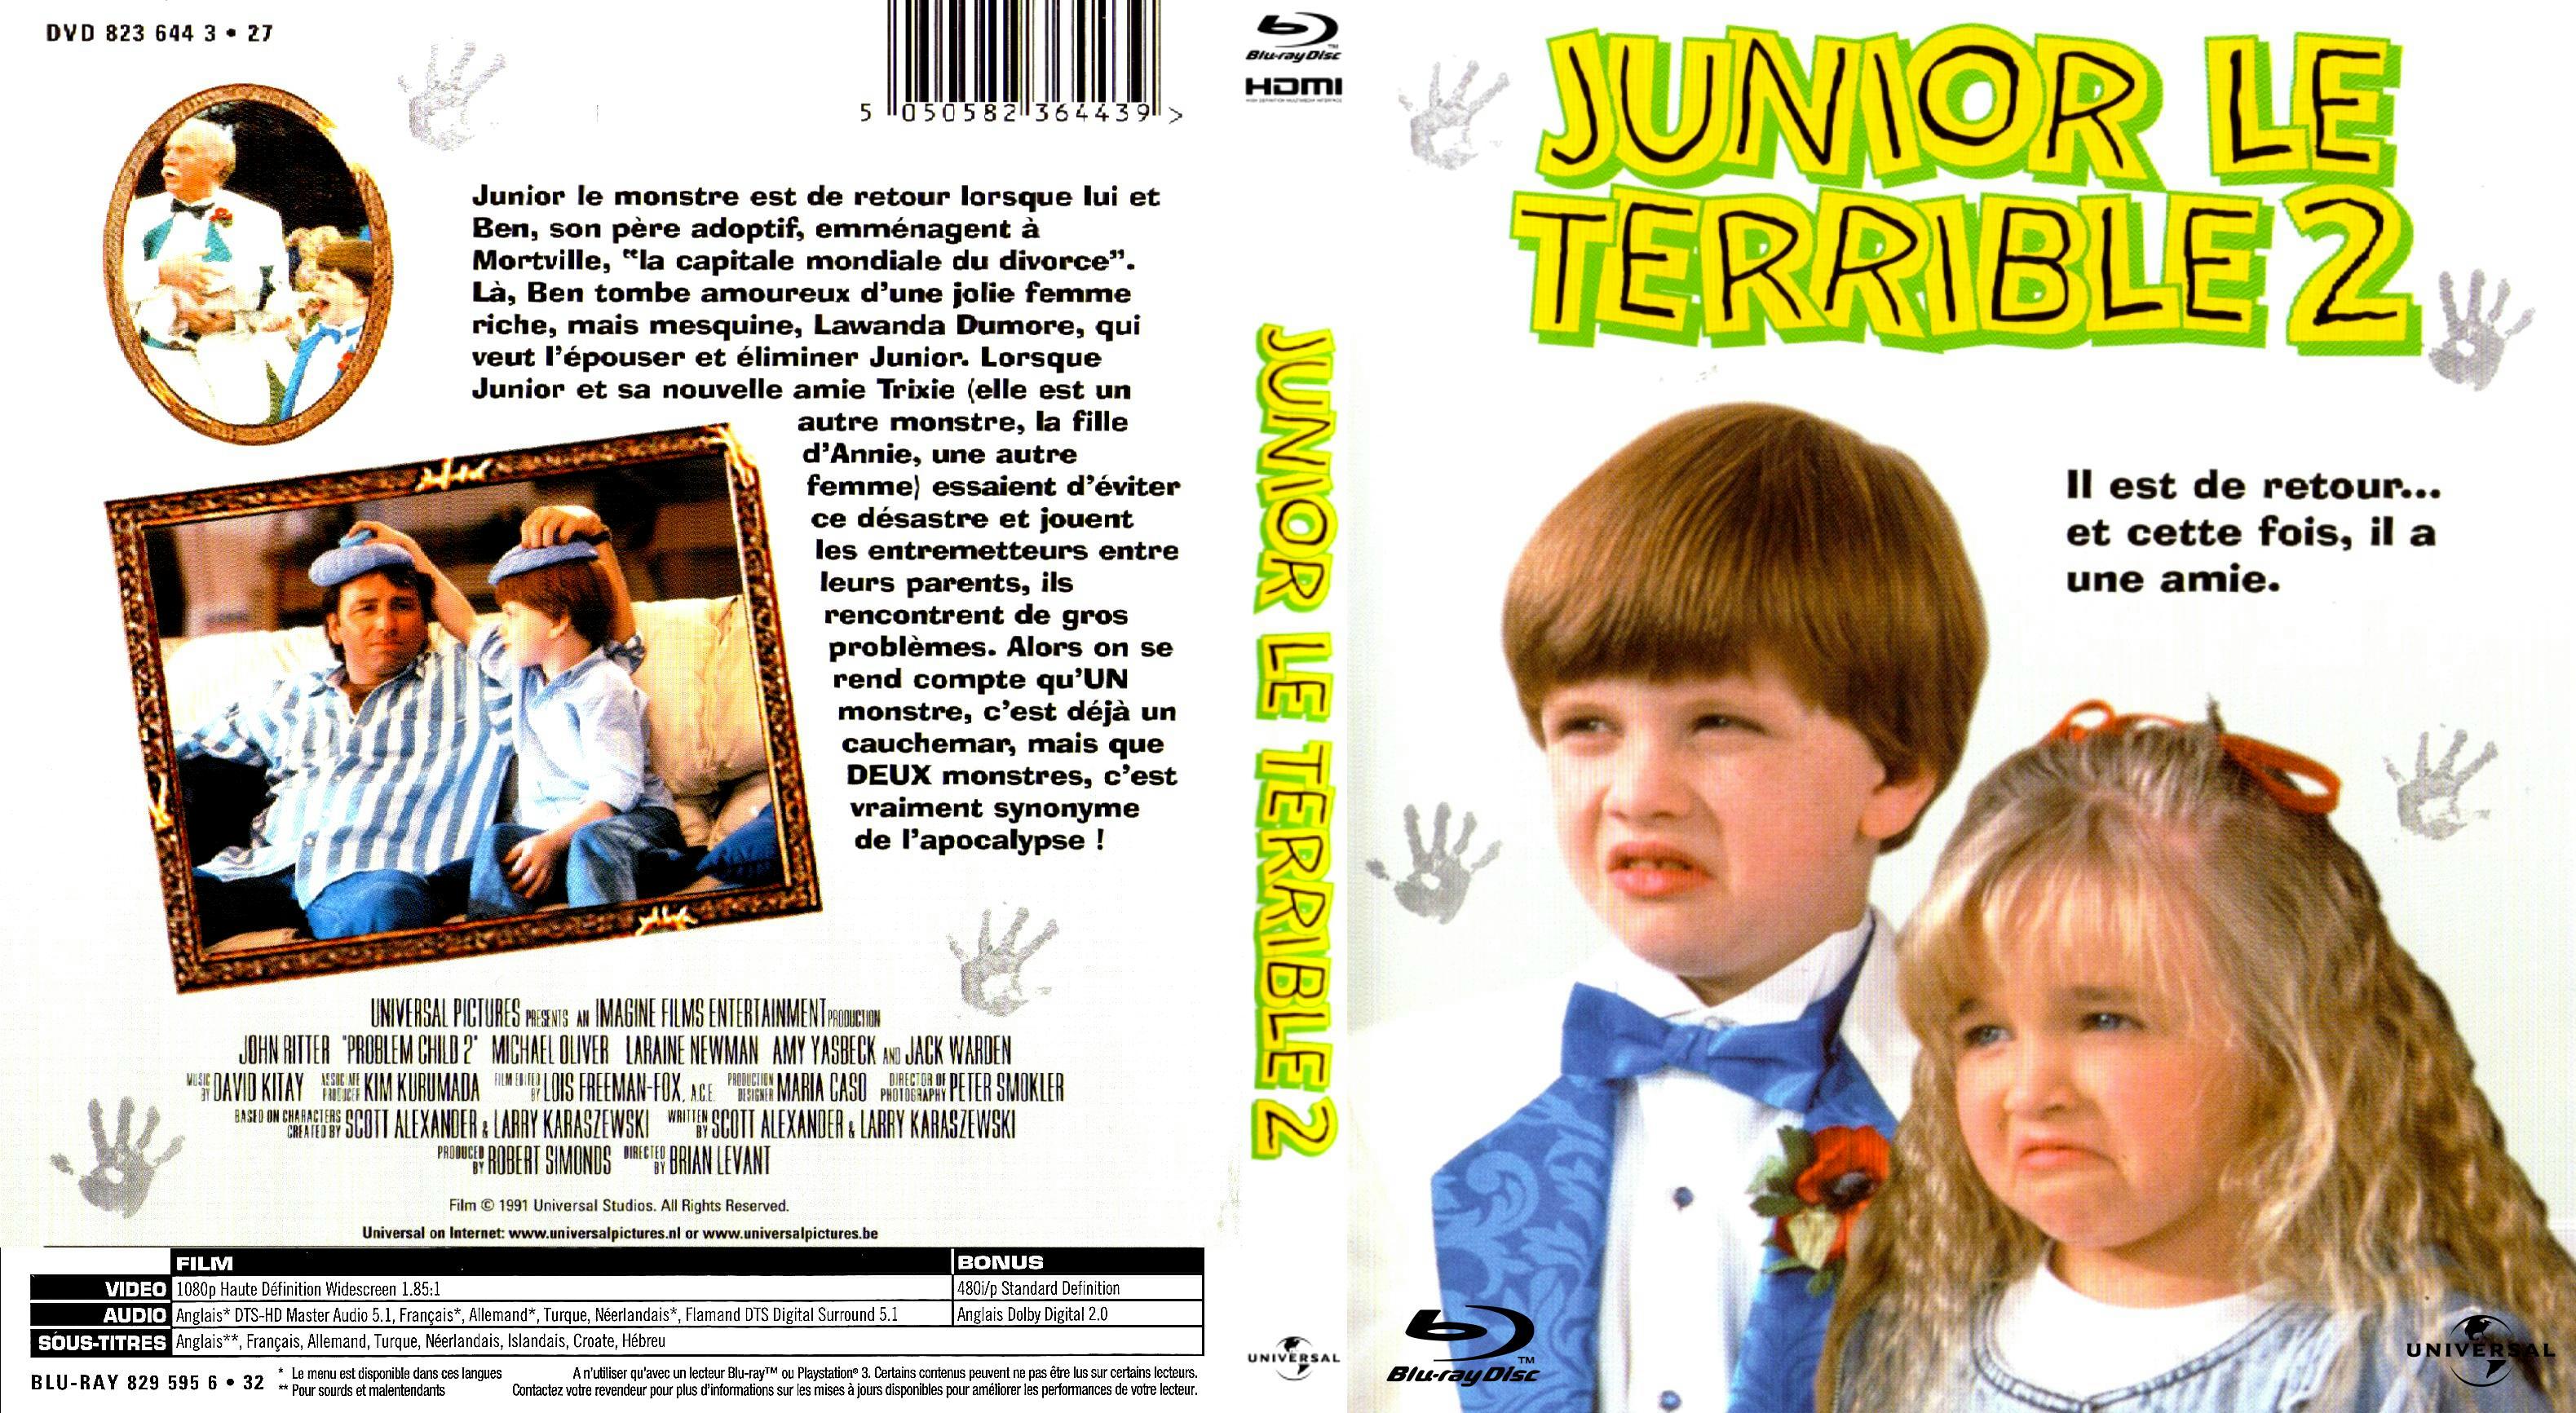 Jaquette DVD Junior le terrible 2 custom (BLU-RAY)